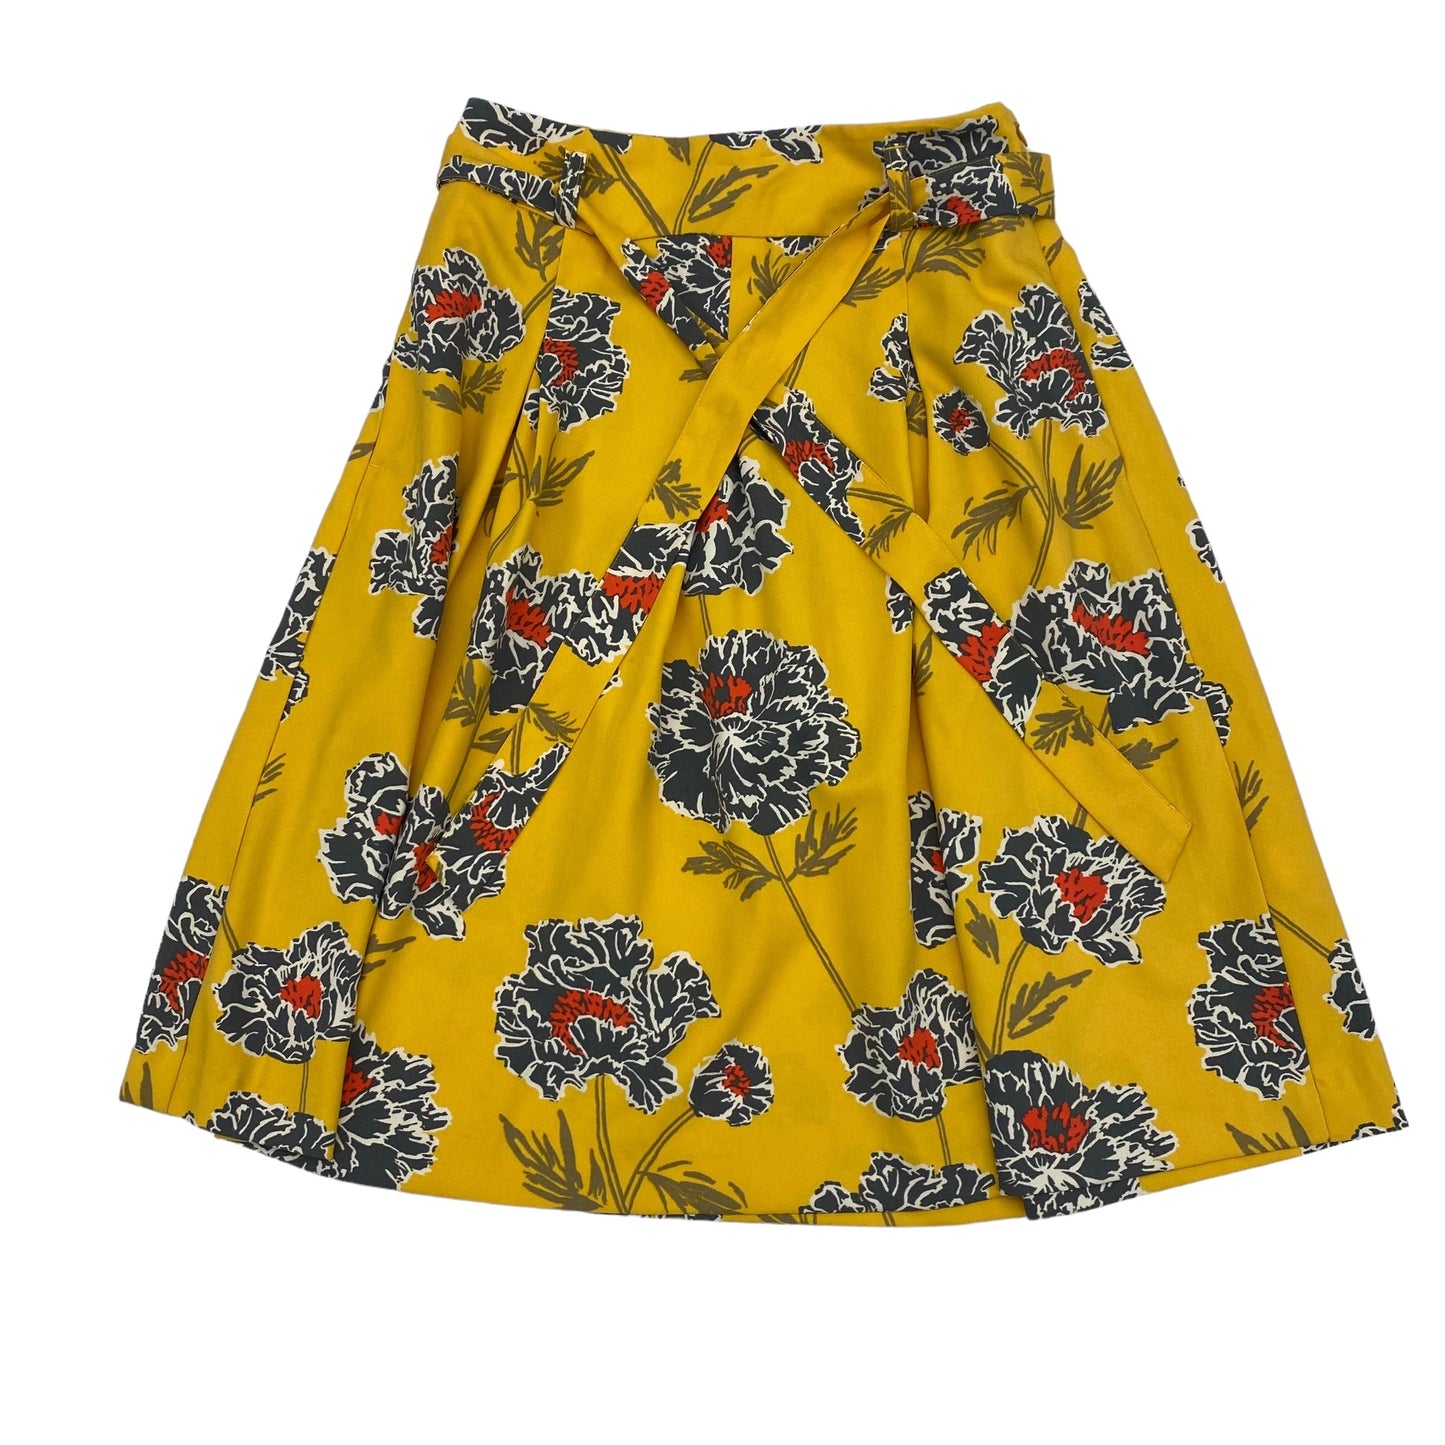 Skirt Midi By Banana Republic  Size: 0petite